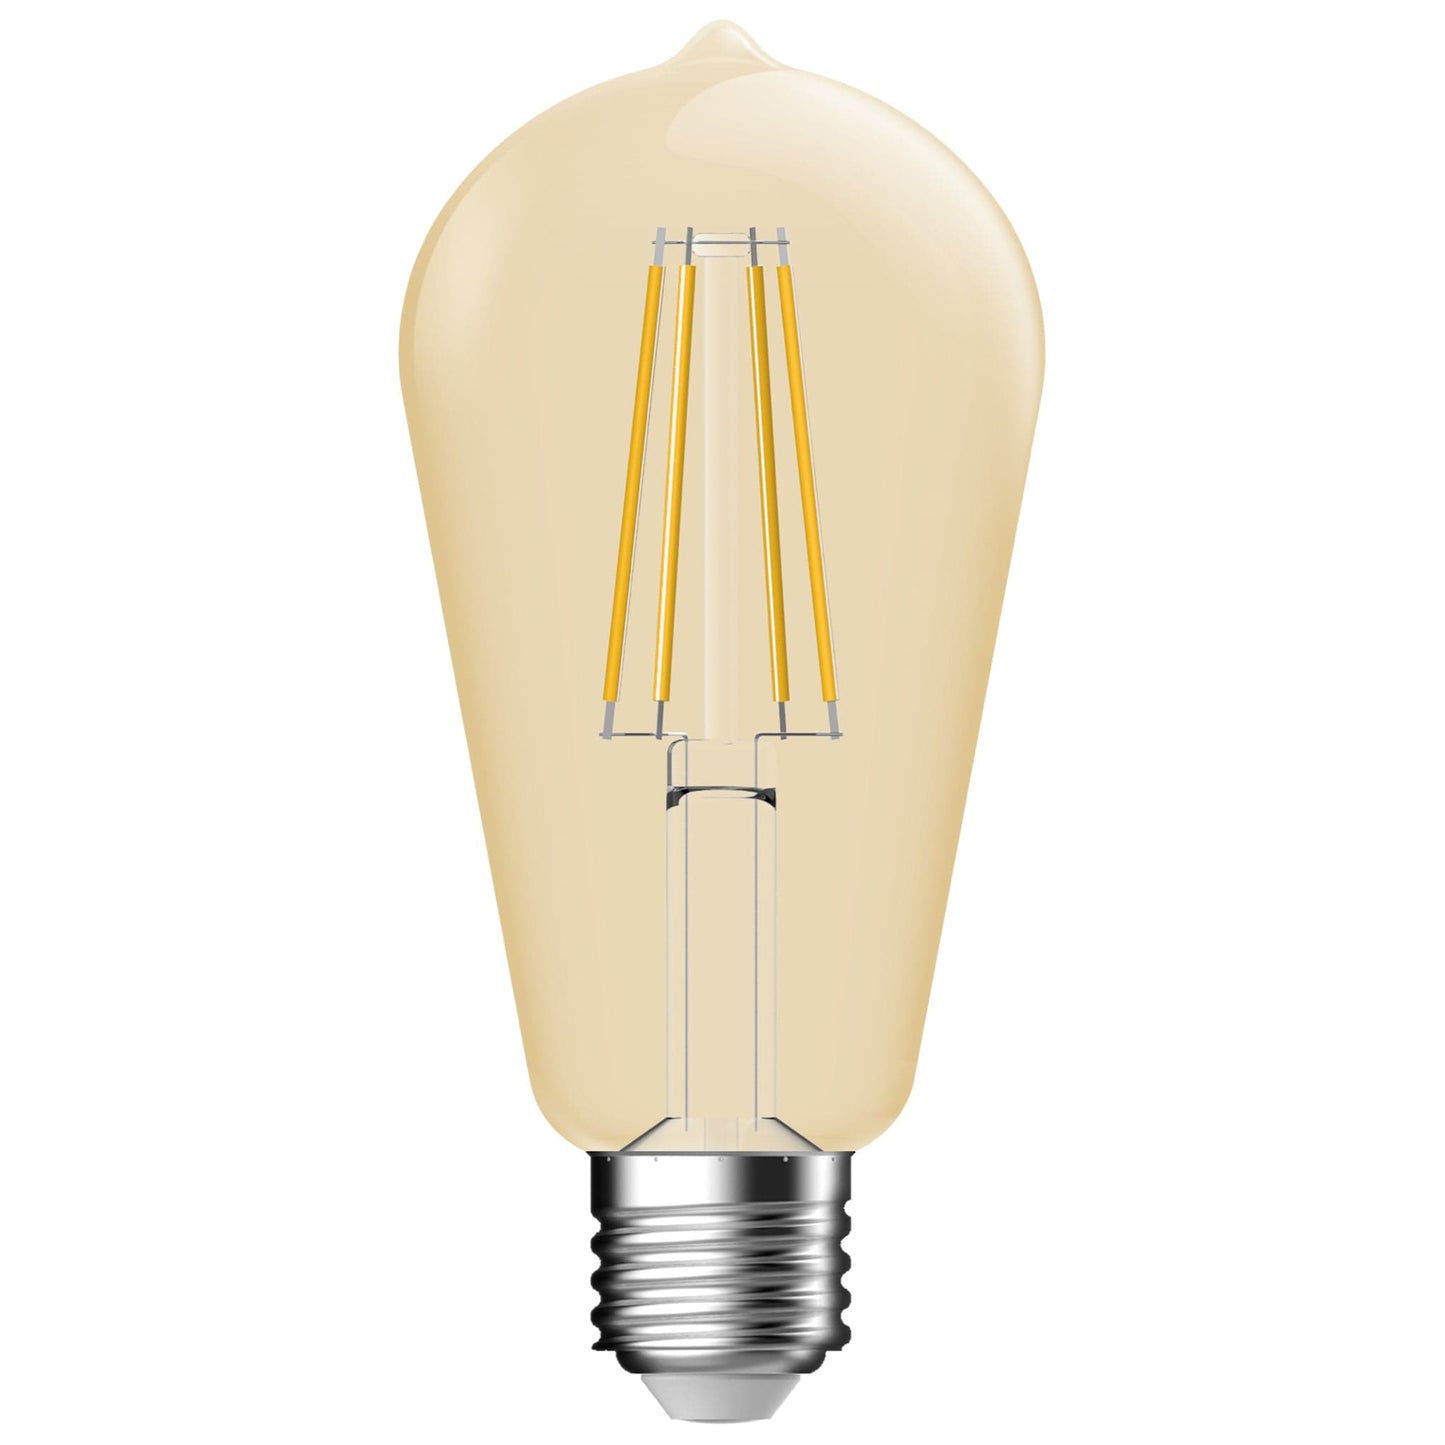 Heavenly Chandeliers Light Bulbs Decorative E27 St64 Dimmable light bulb, warm golden glow